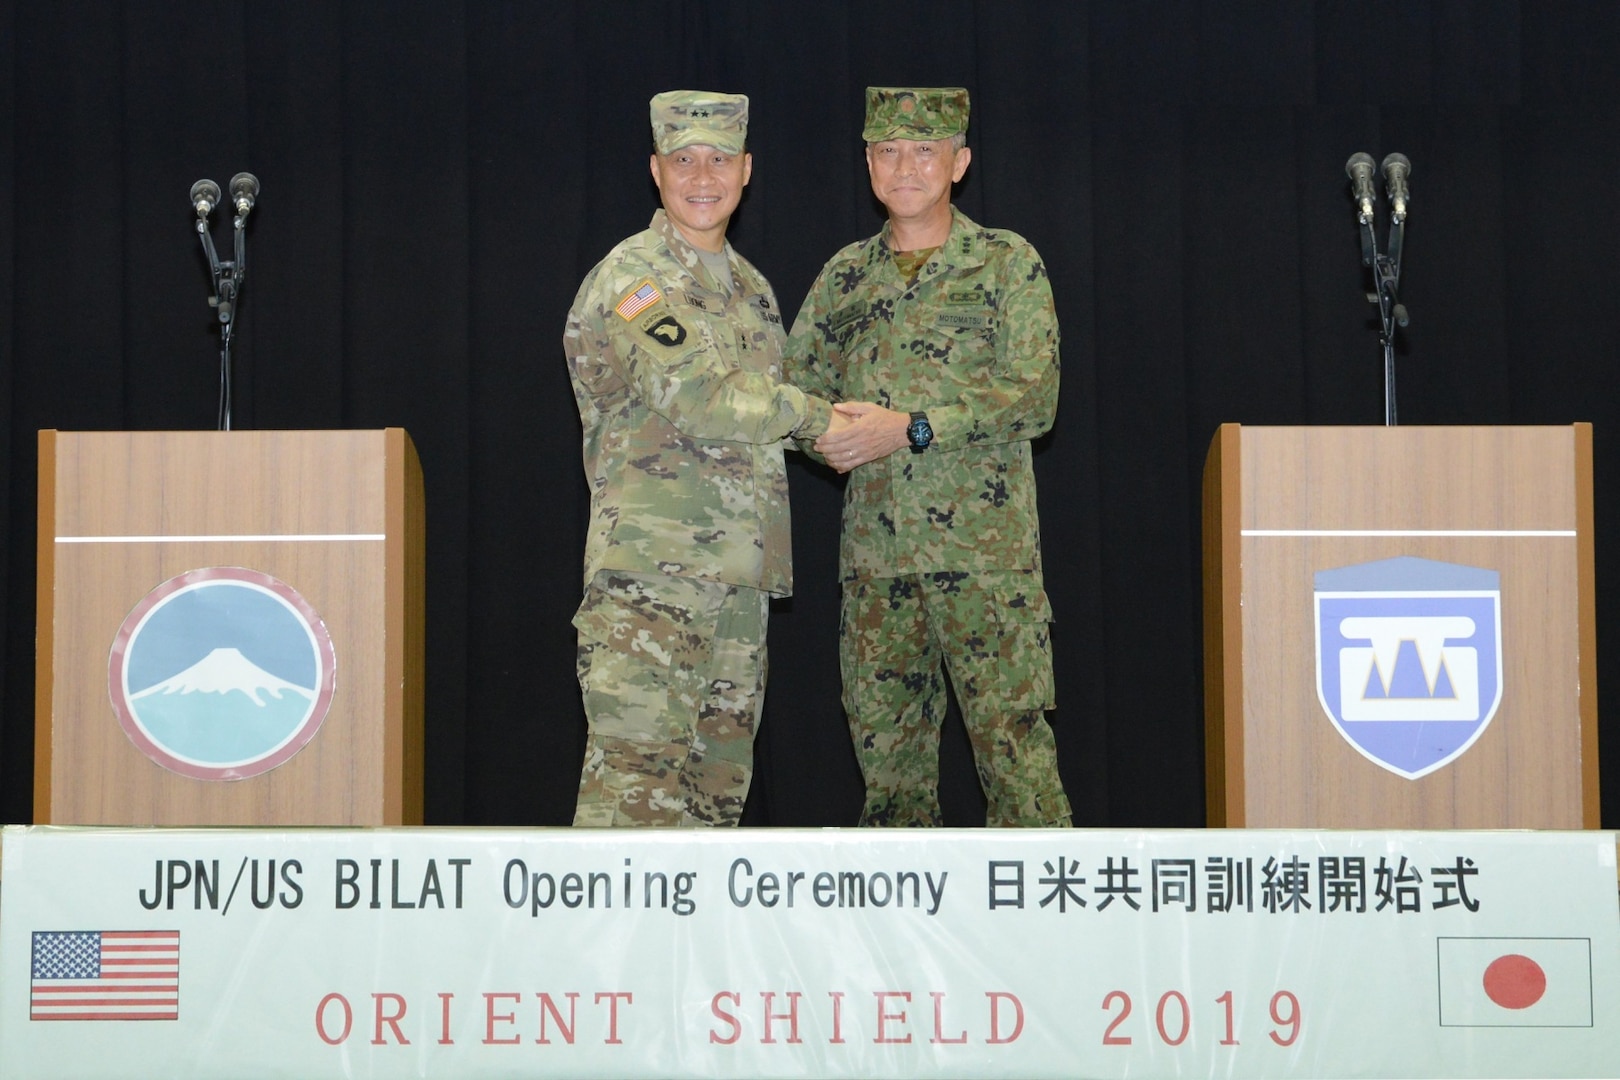 17th Field Artillery Brigade participates in Orient Shield 2019 as Multi Domain Task Force